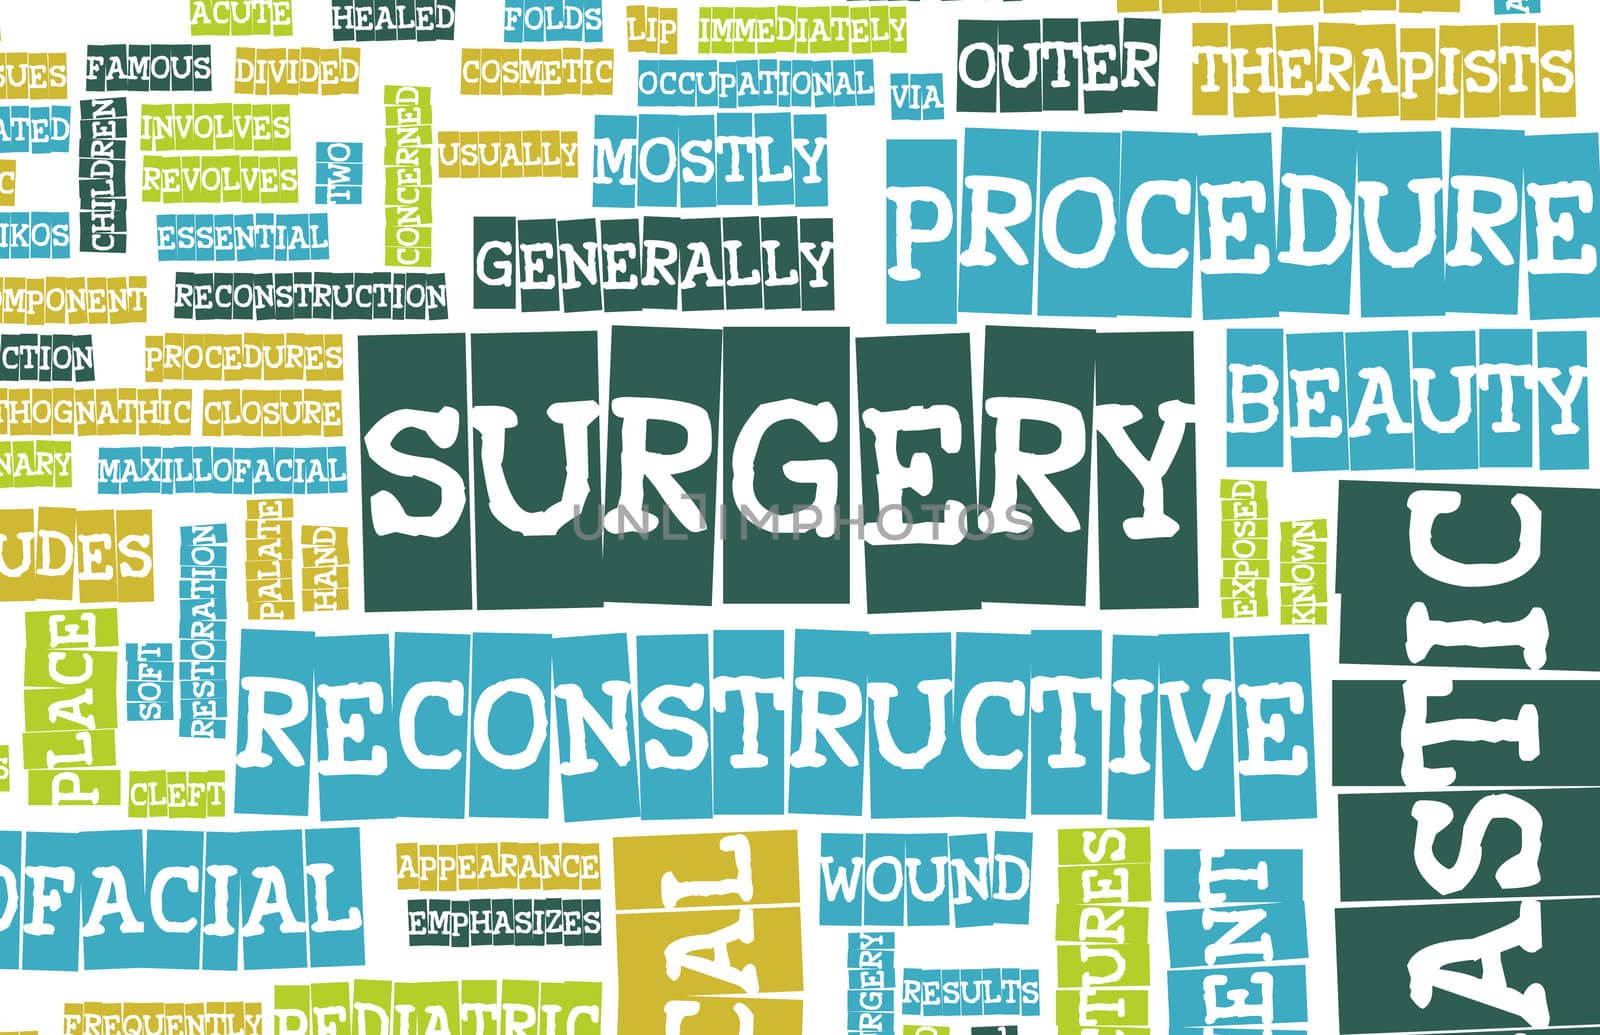 Reconstructive Surgery by kentoh